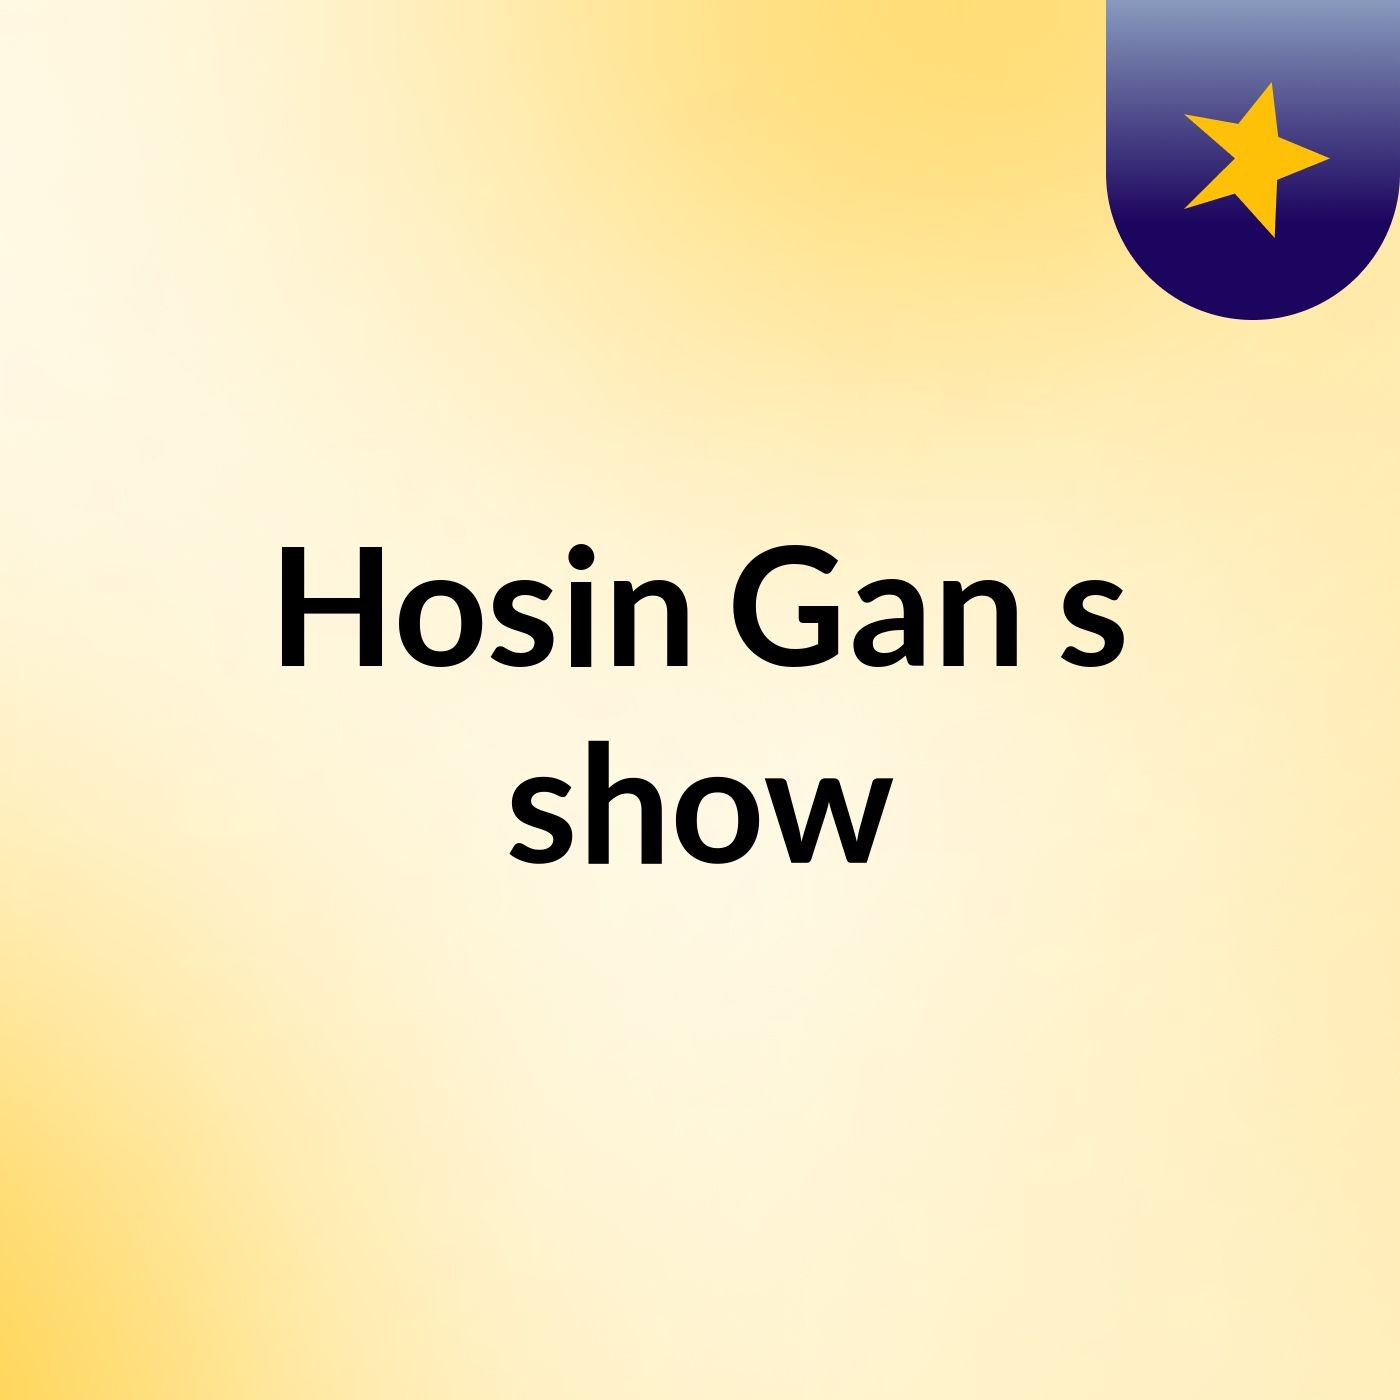 Hosin Gan's show